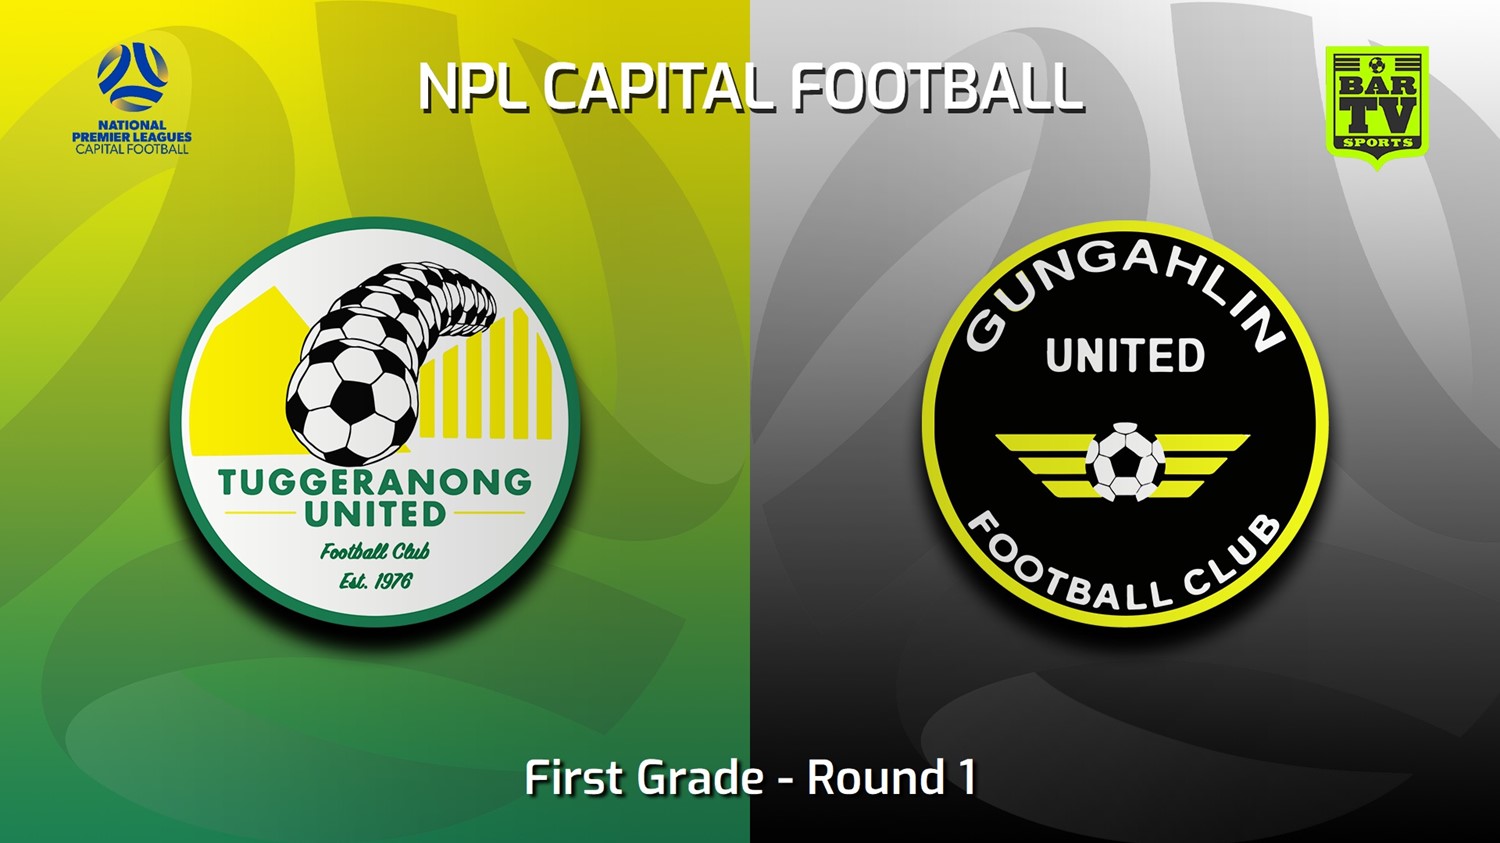 230402-Capital NPL Round 1 - Tuggeranong United v Gungahlin United Minigame Slate Image